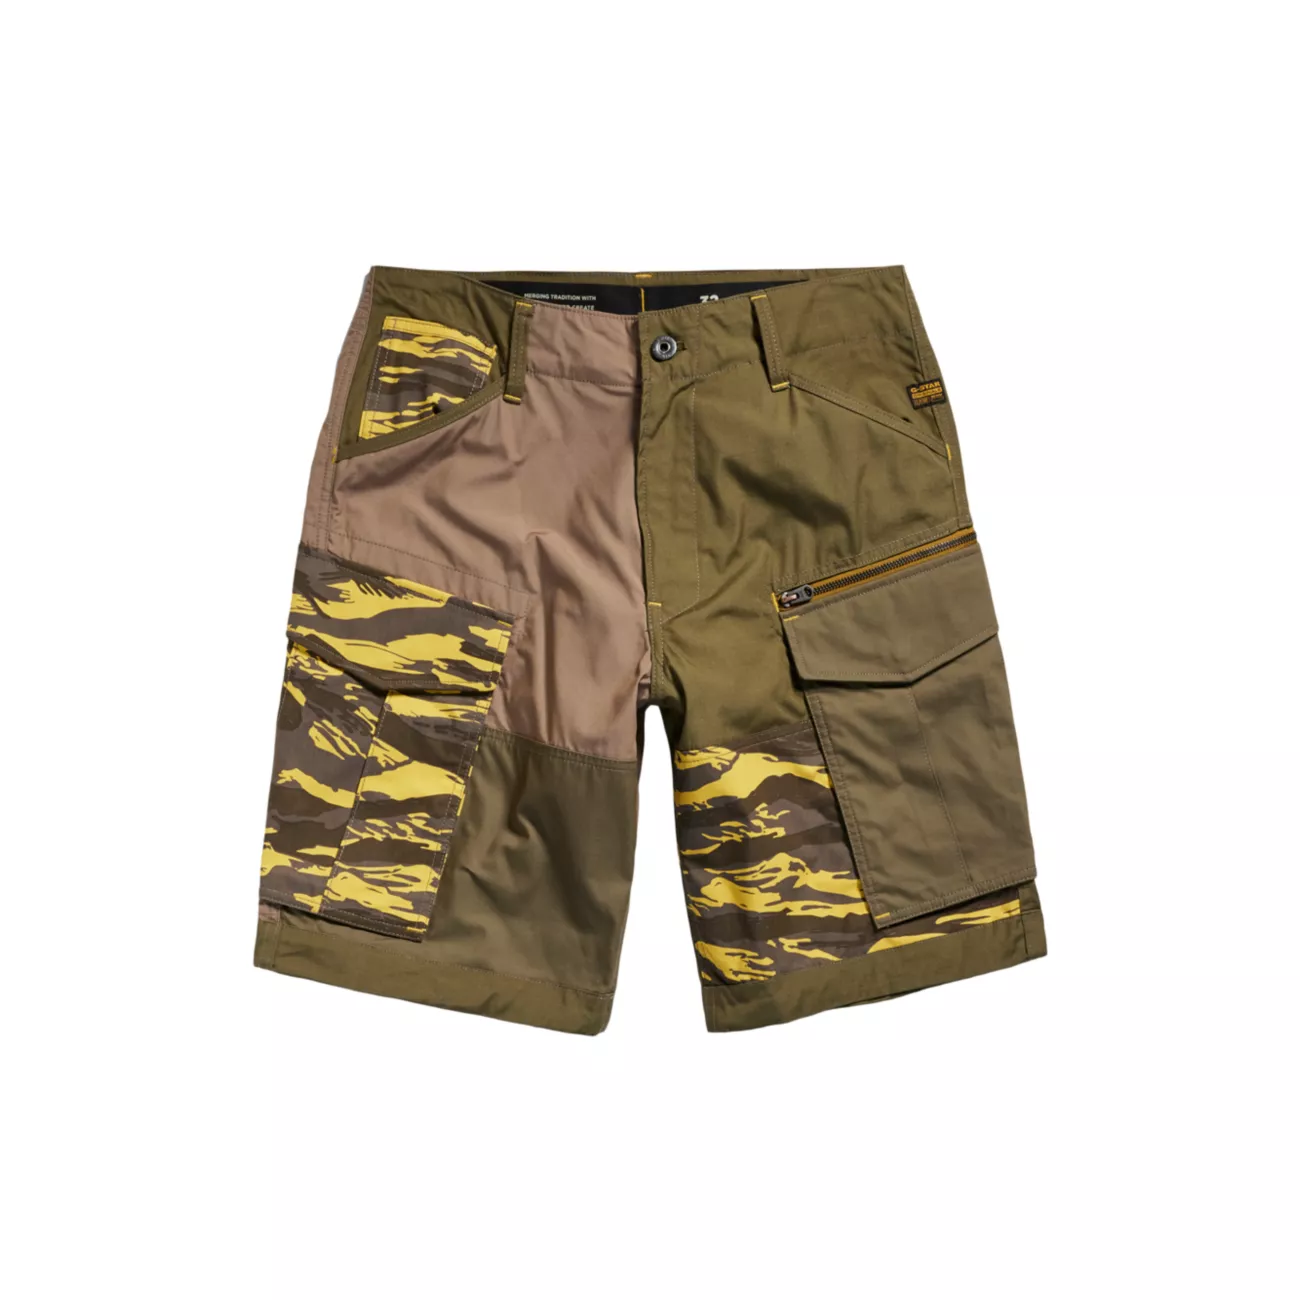 Rovic Colorblocked Cargo Shorts G-STAR RAW